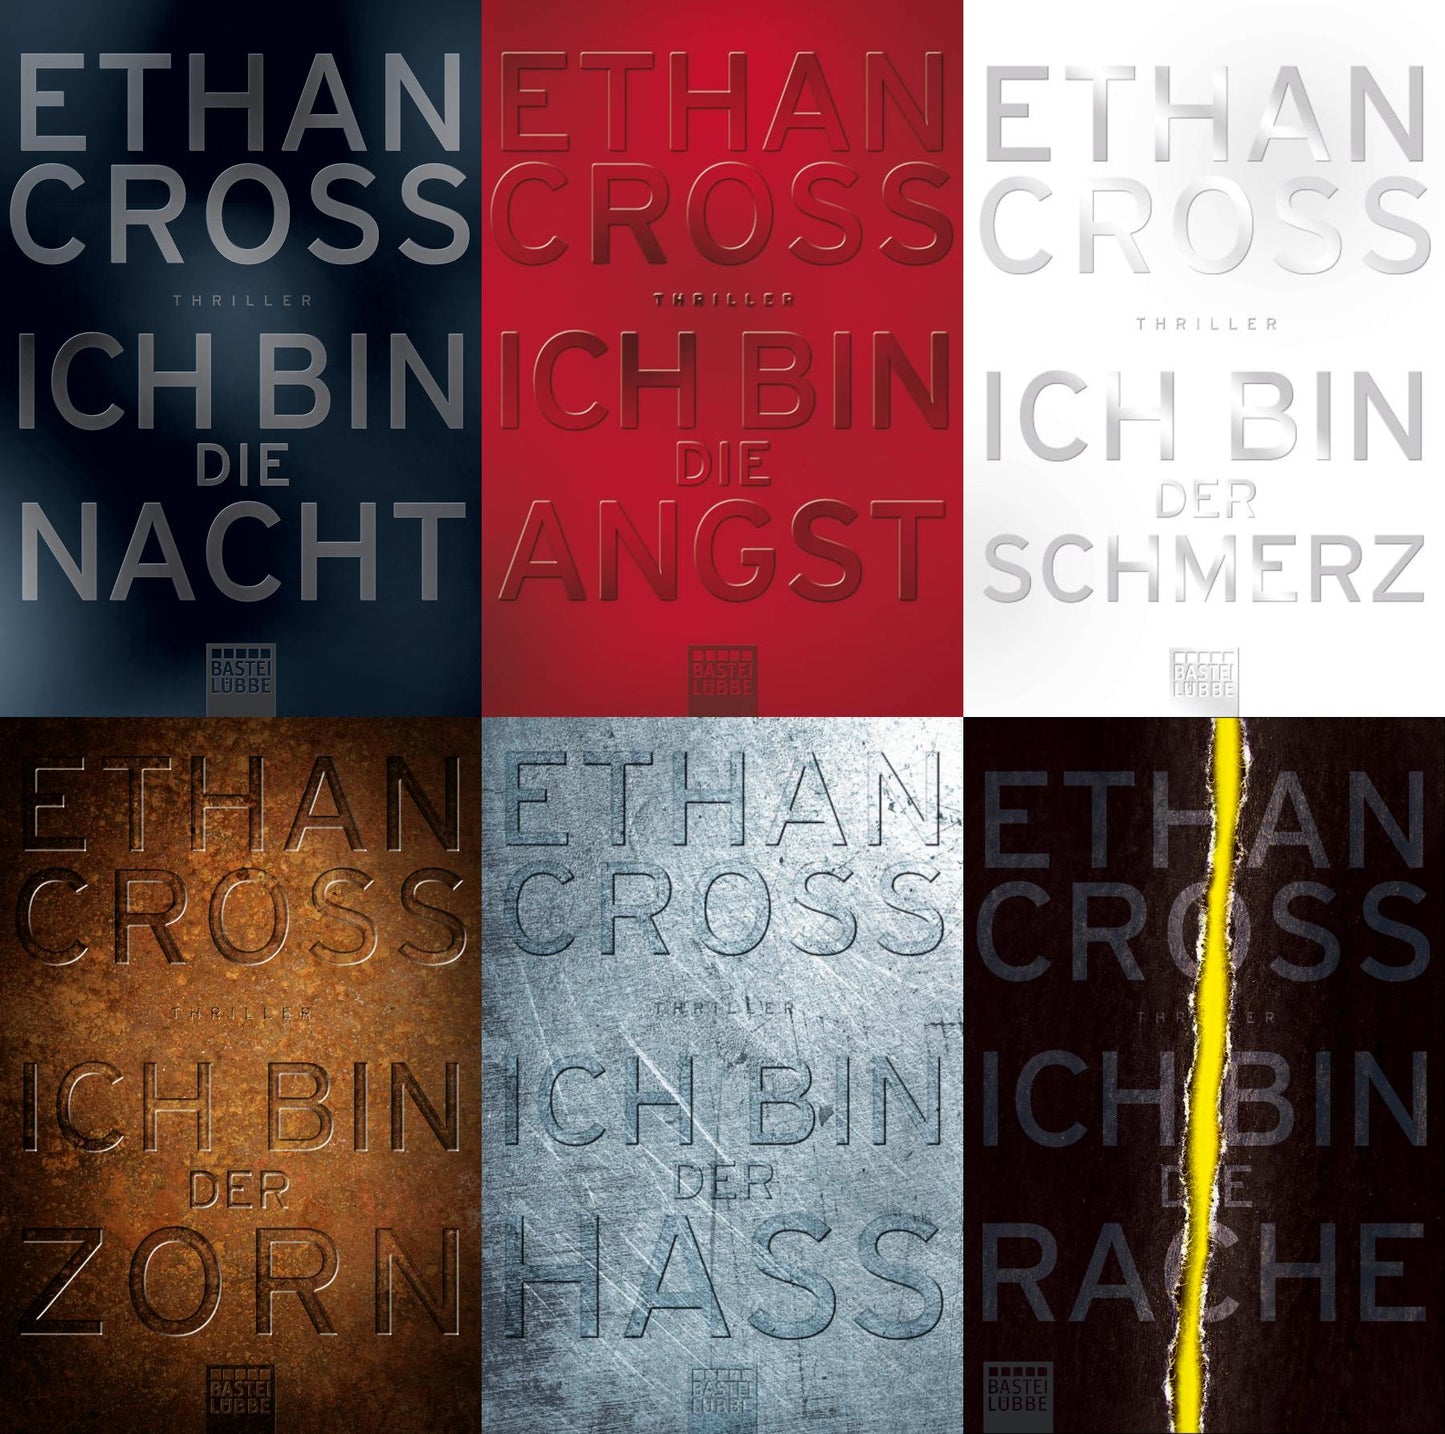 Shepherd Reihe von Ethan Cross Band 1 - 6 plus 1 exklusives Postkartenset